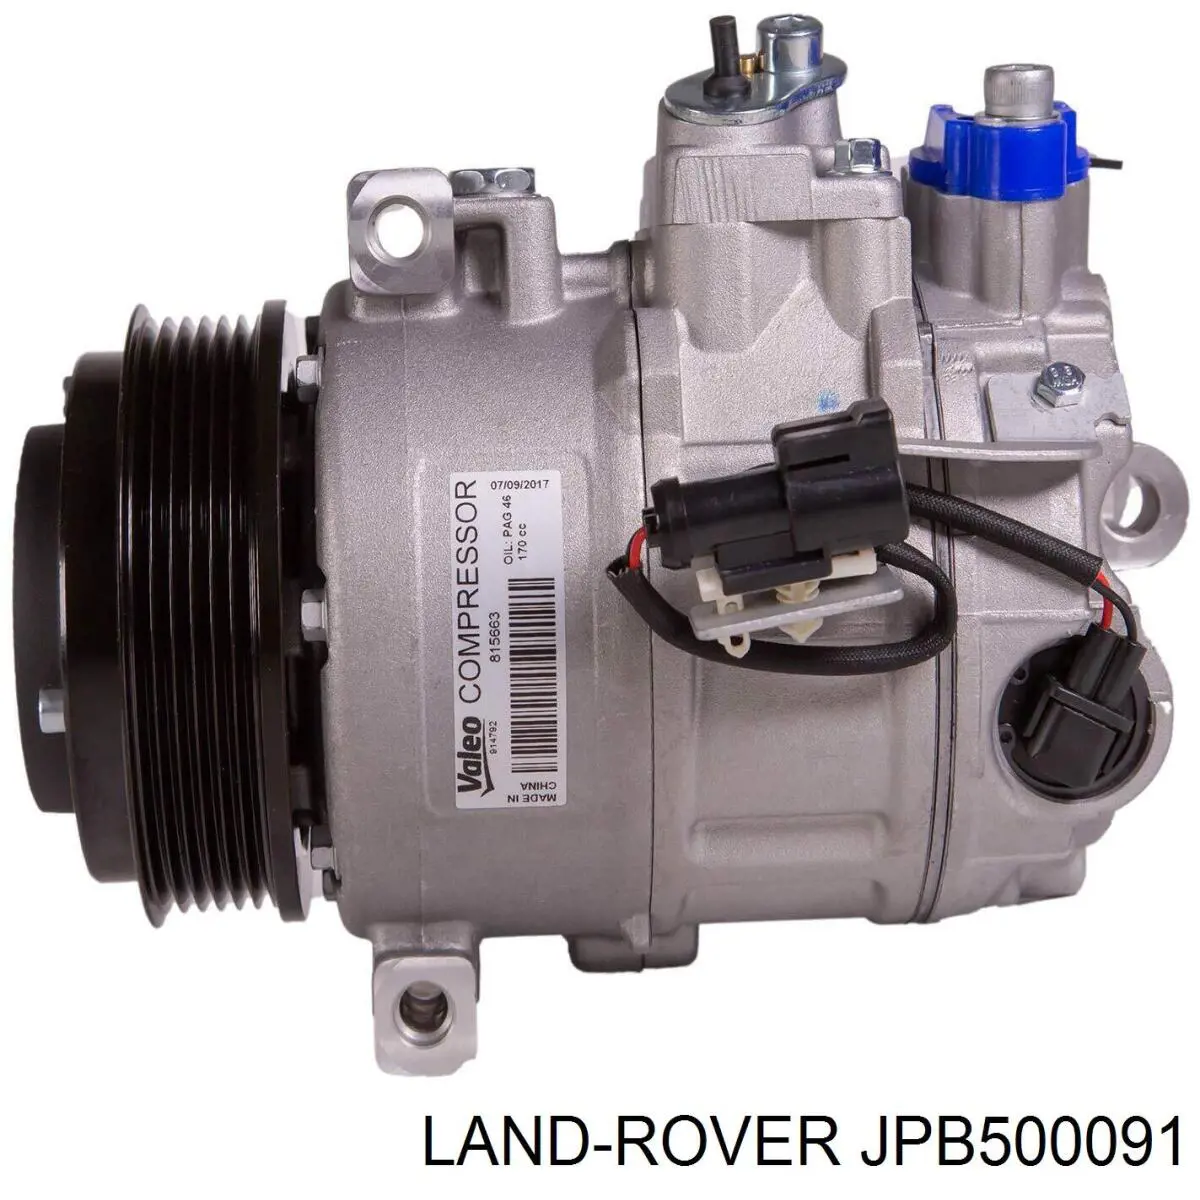 JPB500091 Rover 